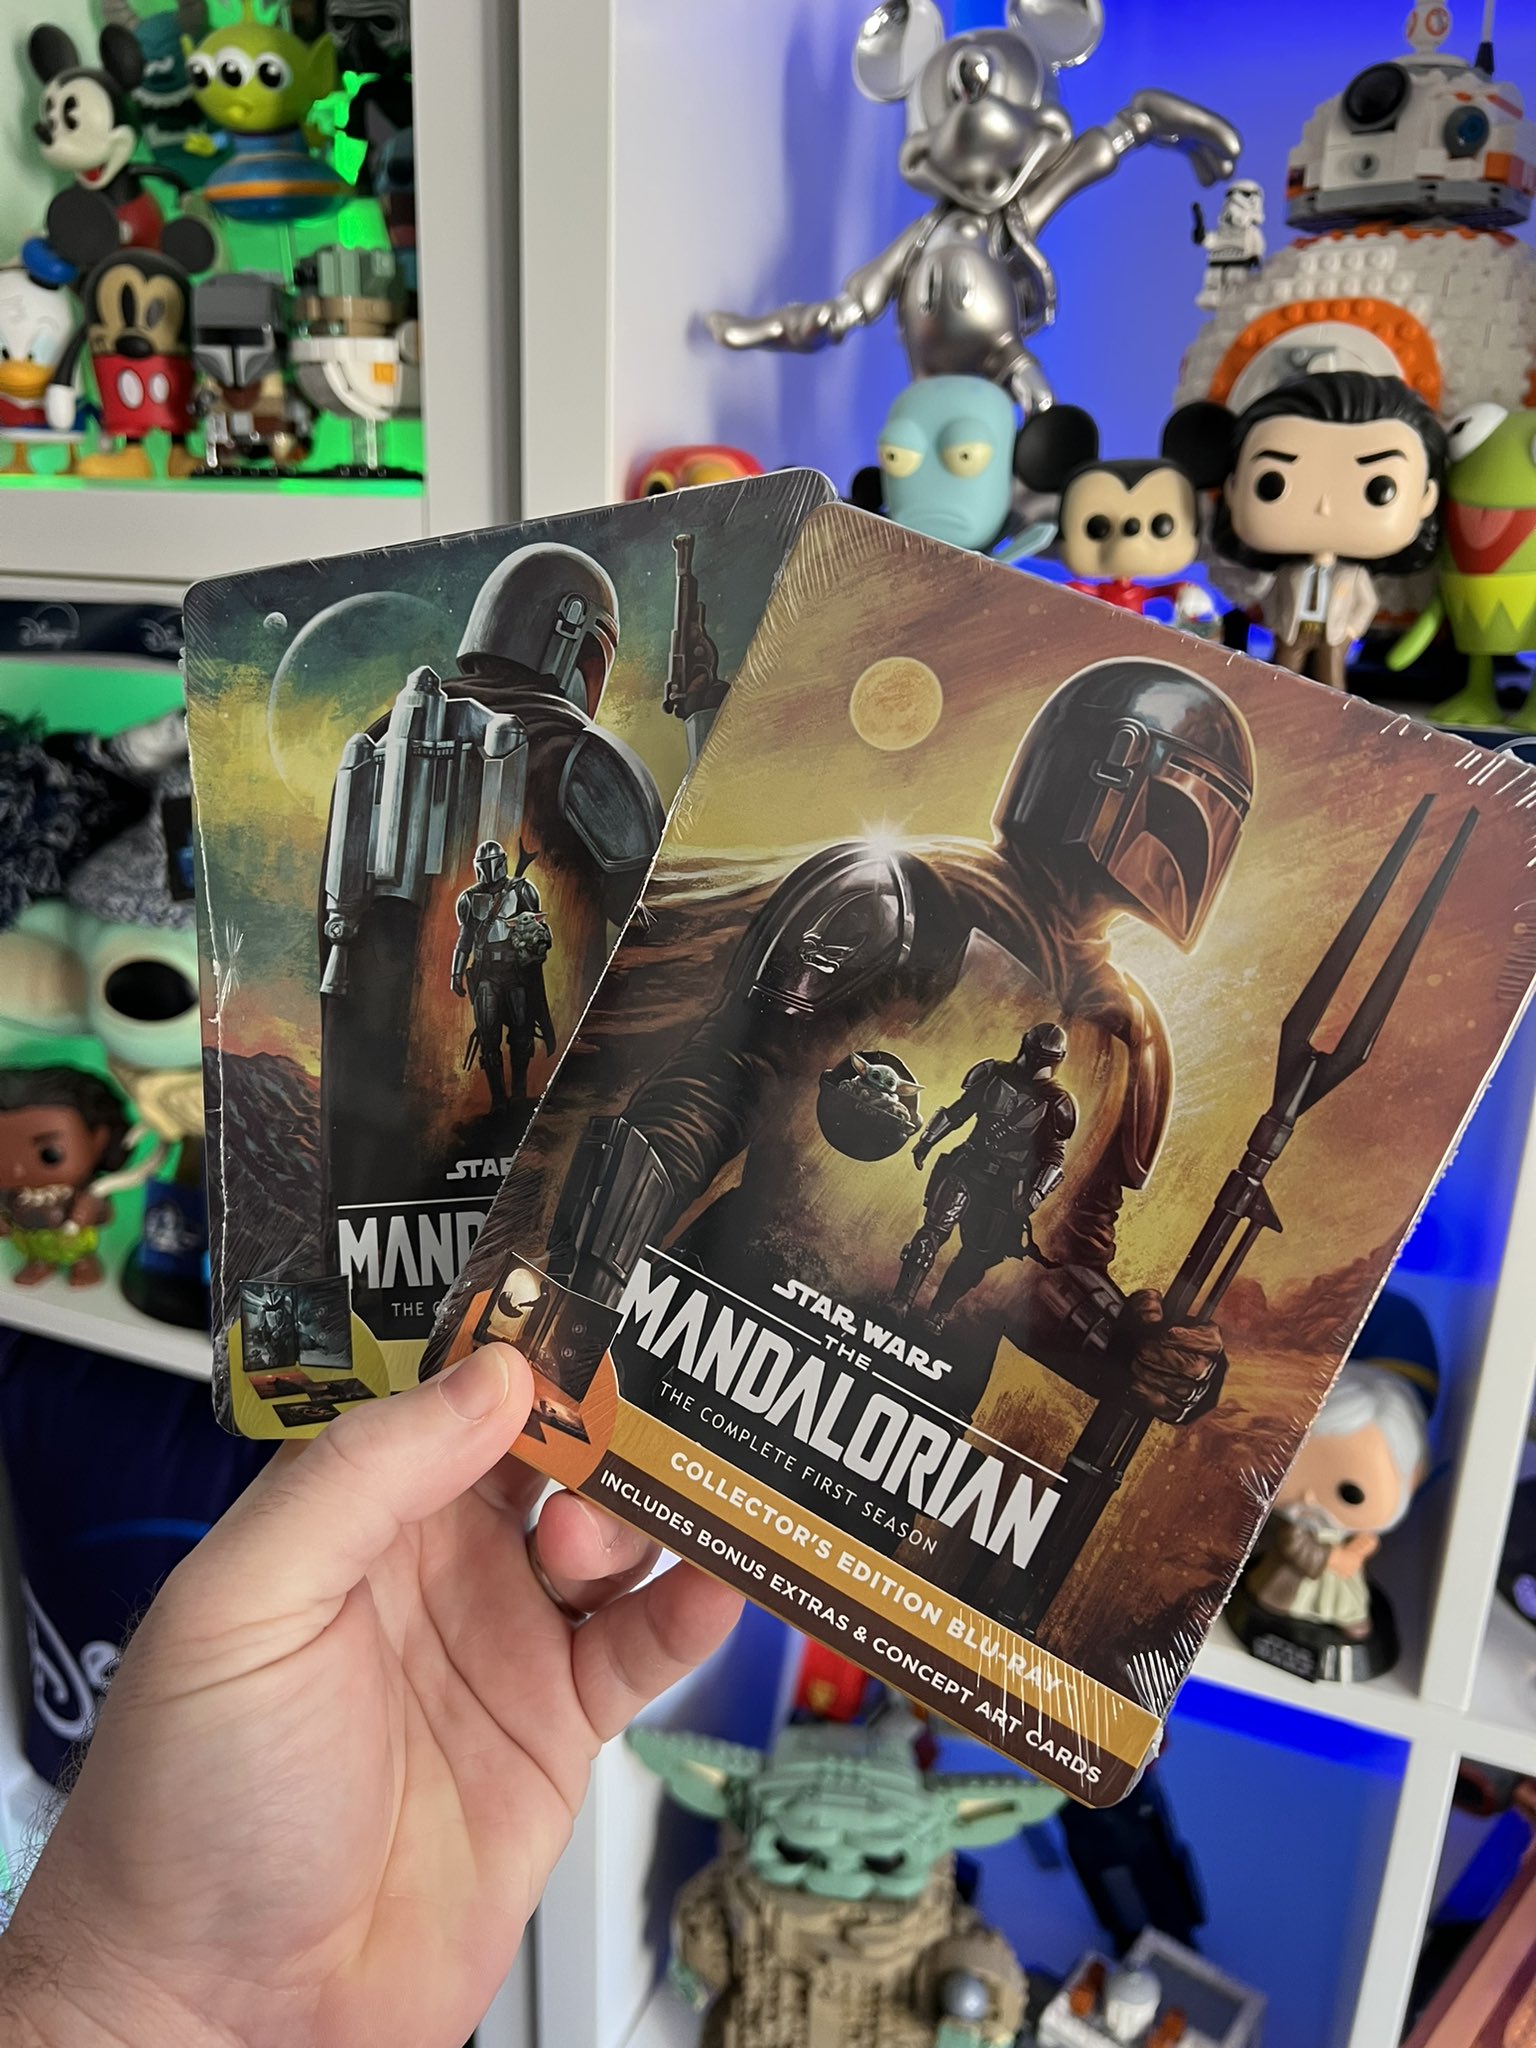 The Mandalorian: The Complete First Season [SteelBook